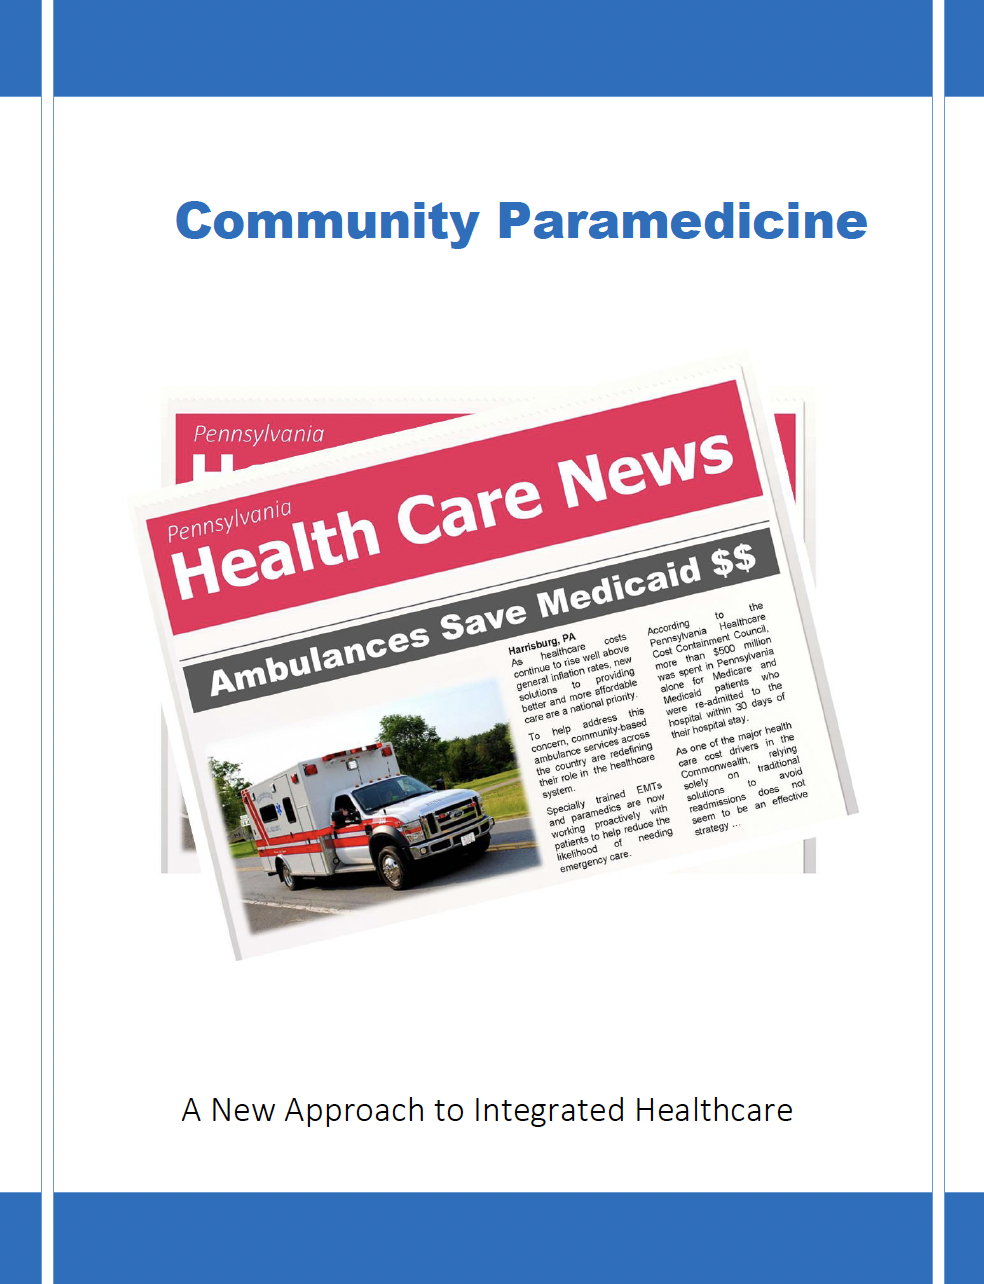 Community Paramedicine Whitepaper